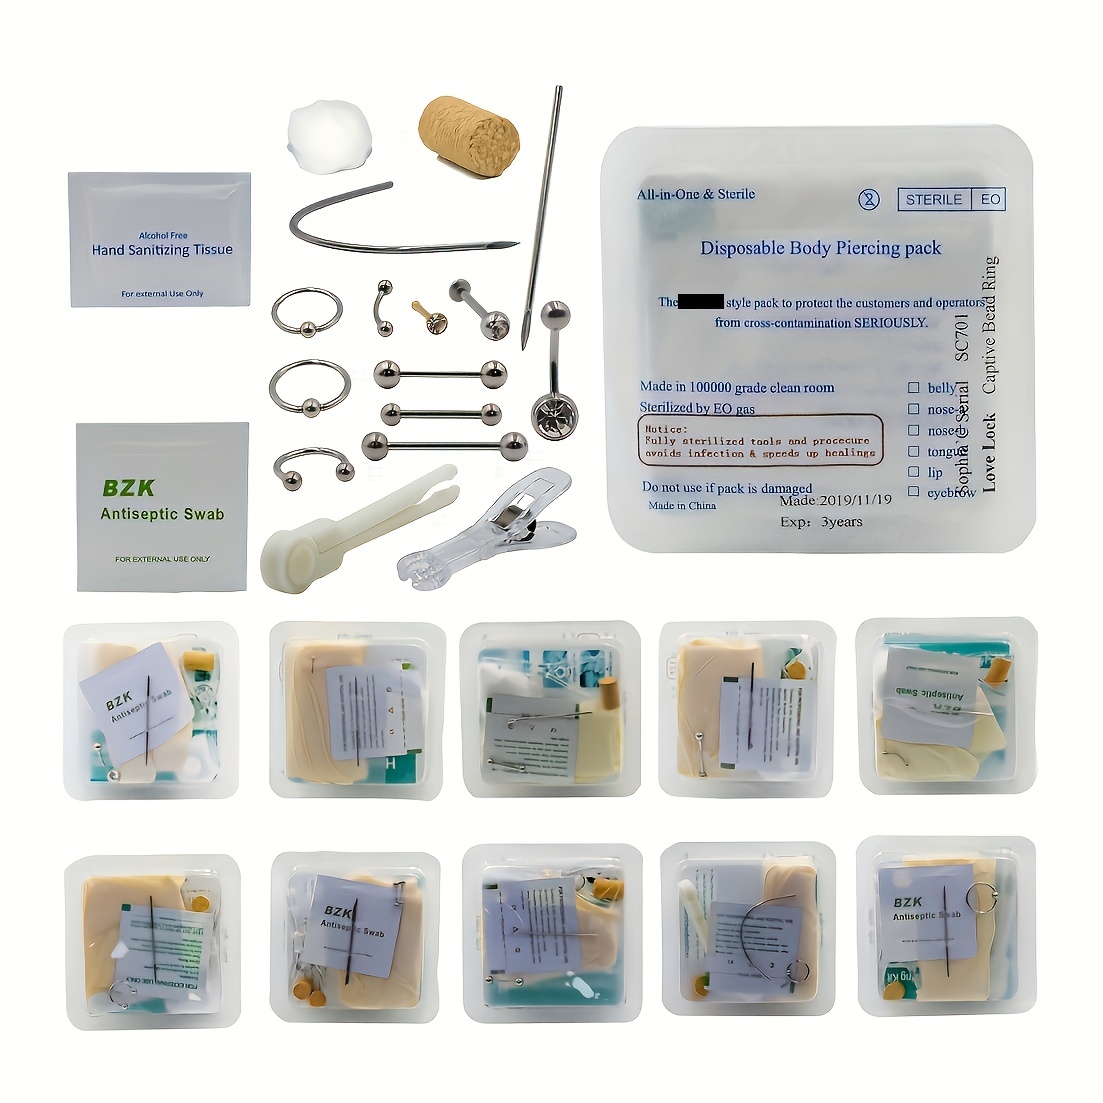 5/25/50/100pcs Disposable Sterile Body Piercing Needles for Navel